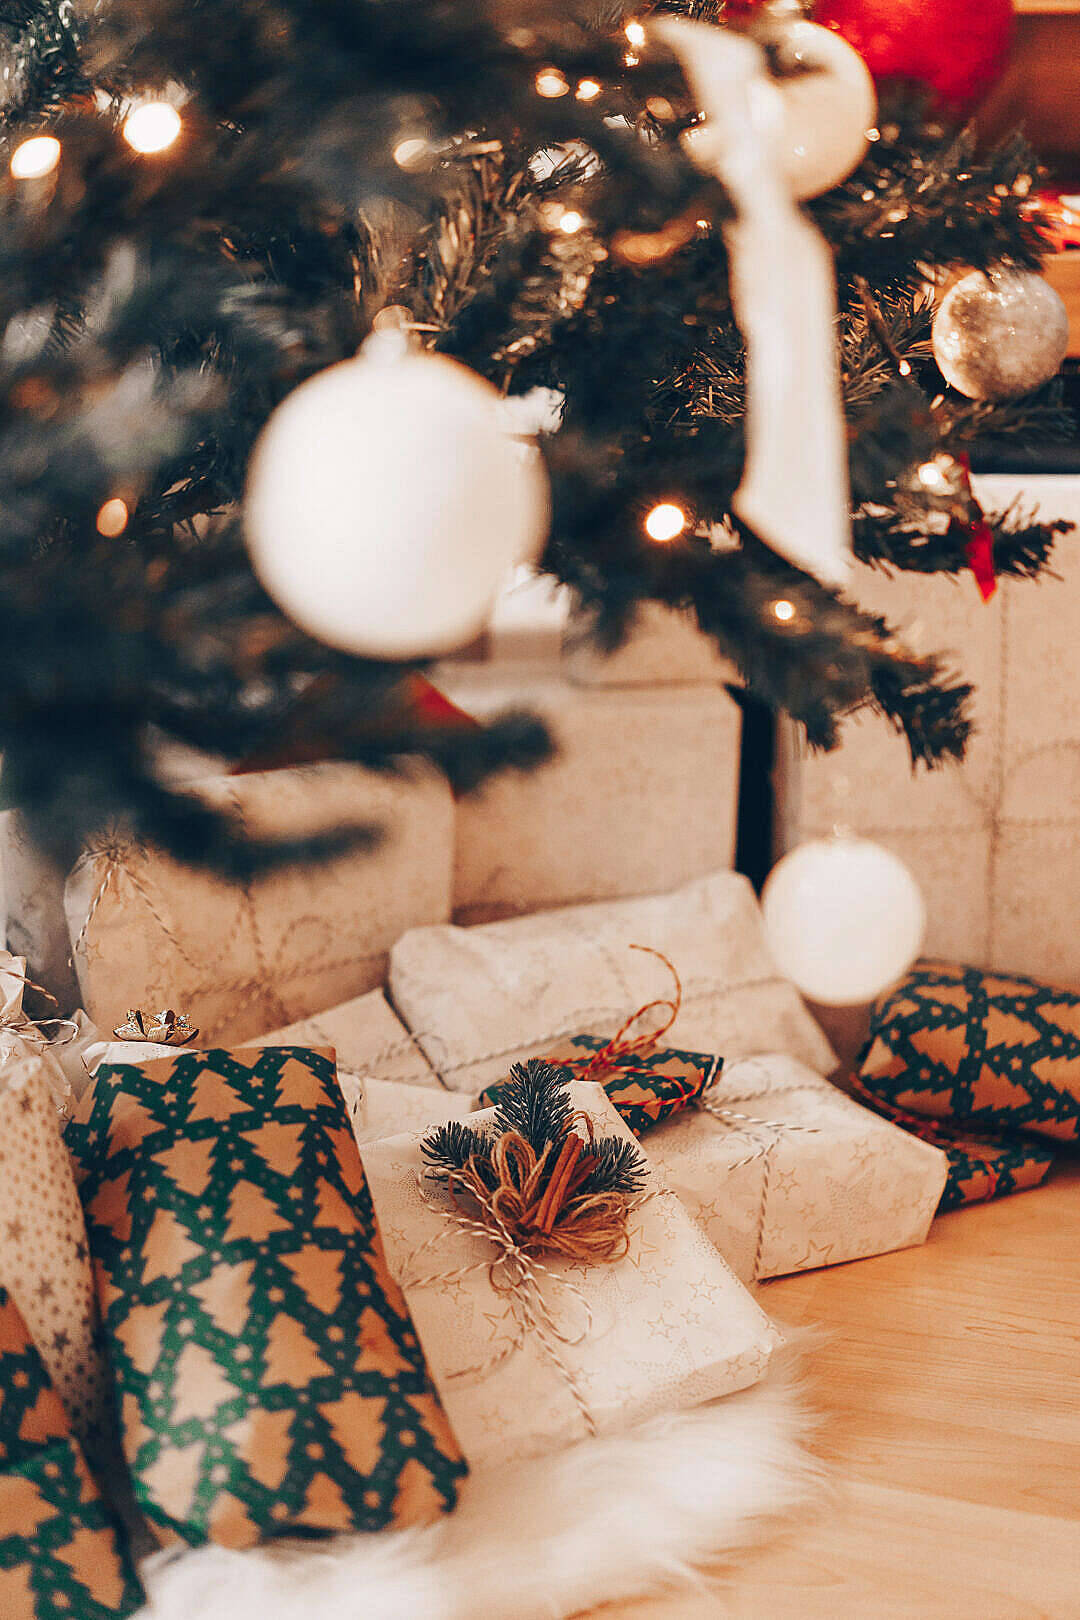 Pretty Presents Under Christmas Tree Wallpaper